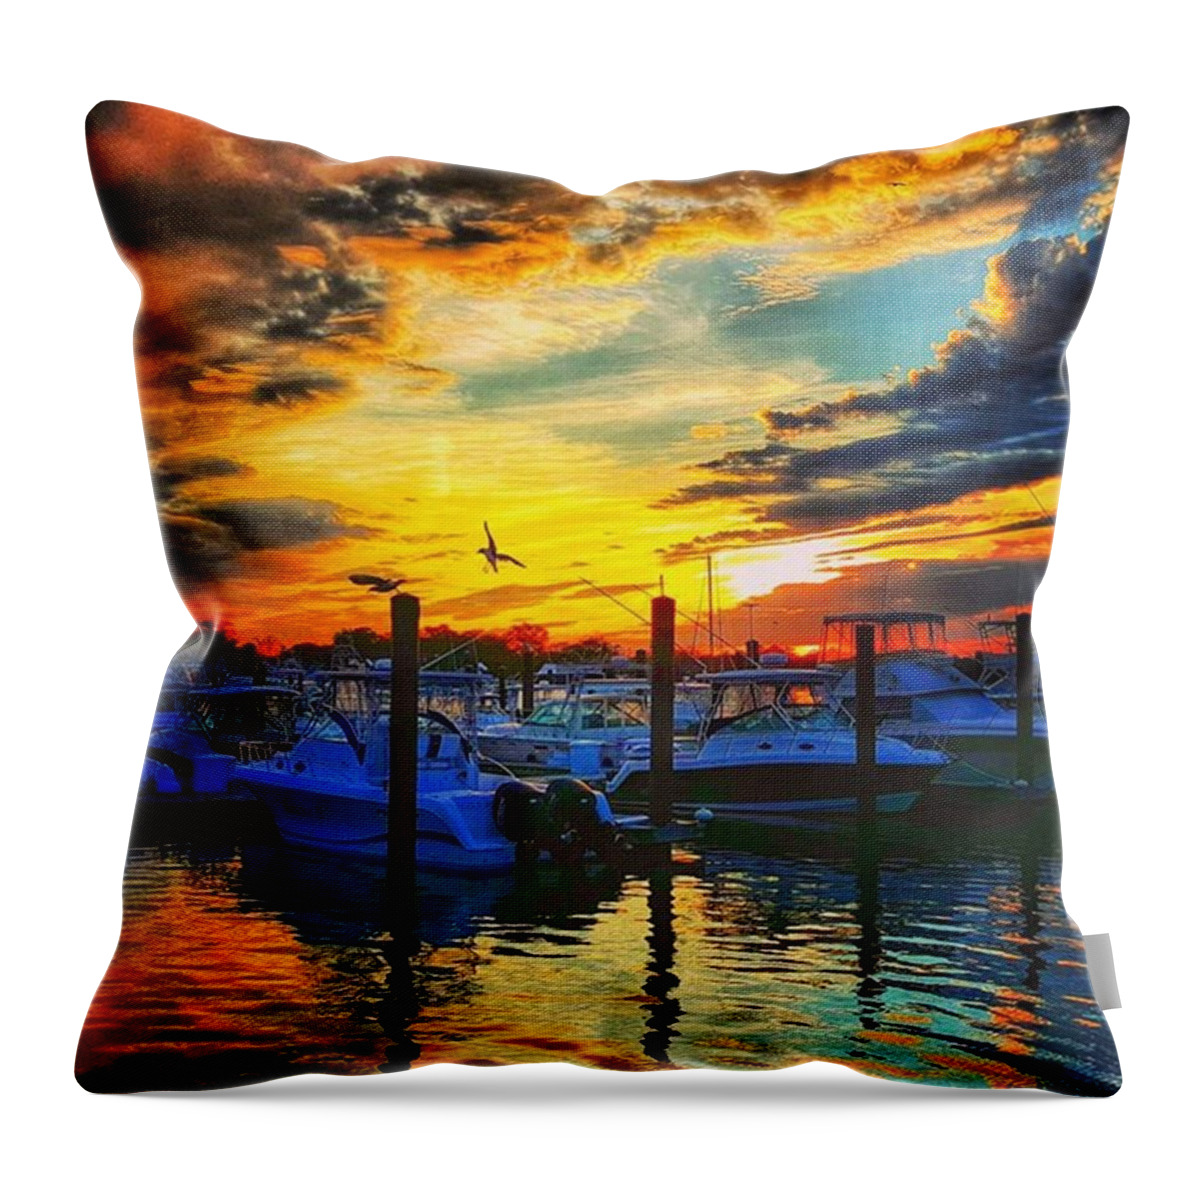 Reflection Throw Pillow featuring the photograph Sunset At Belmar Marina by Lauren Fitzpatrick